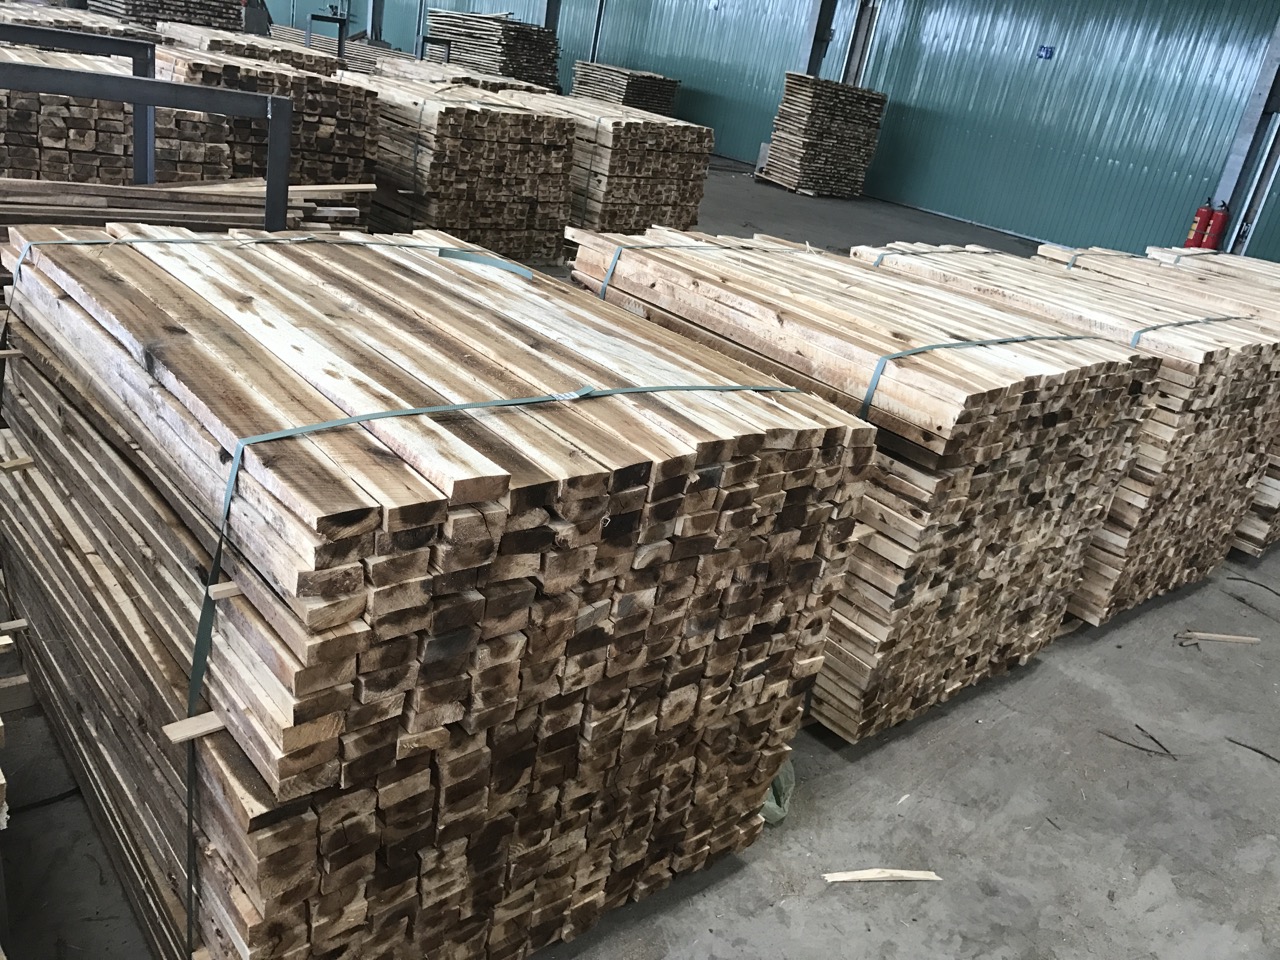  gỗ tràm xẻ sấy